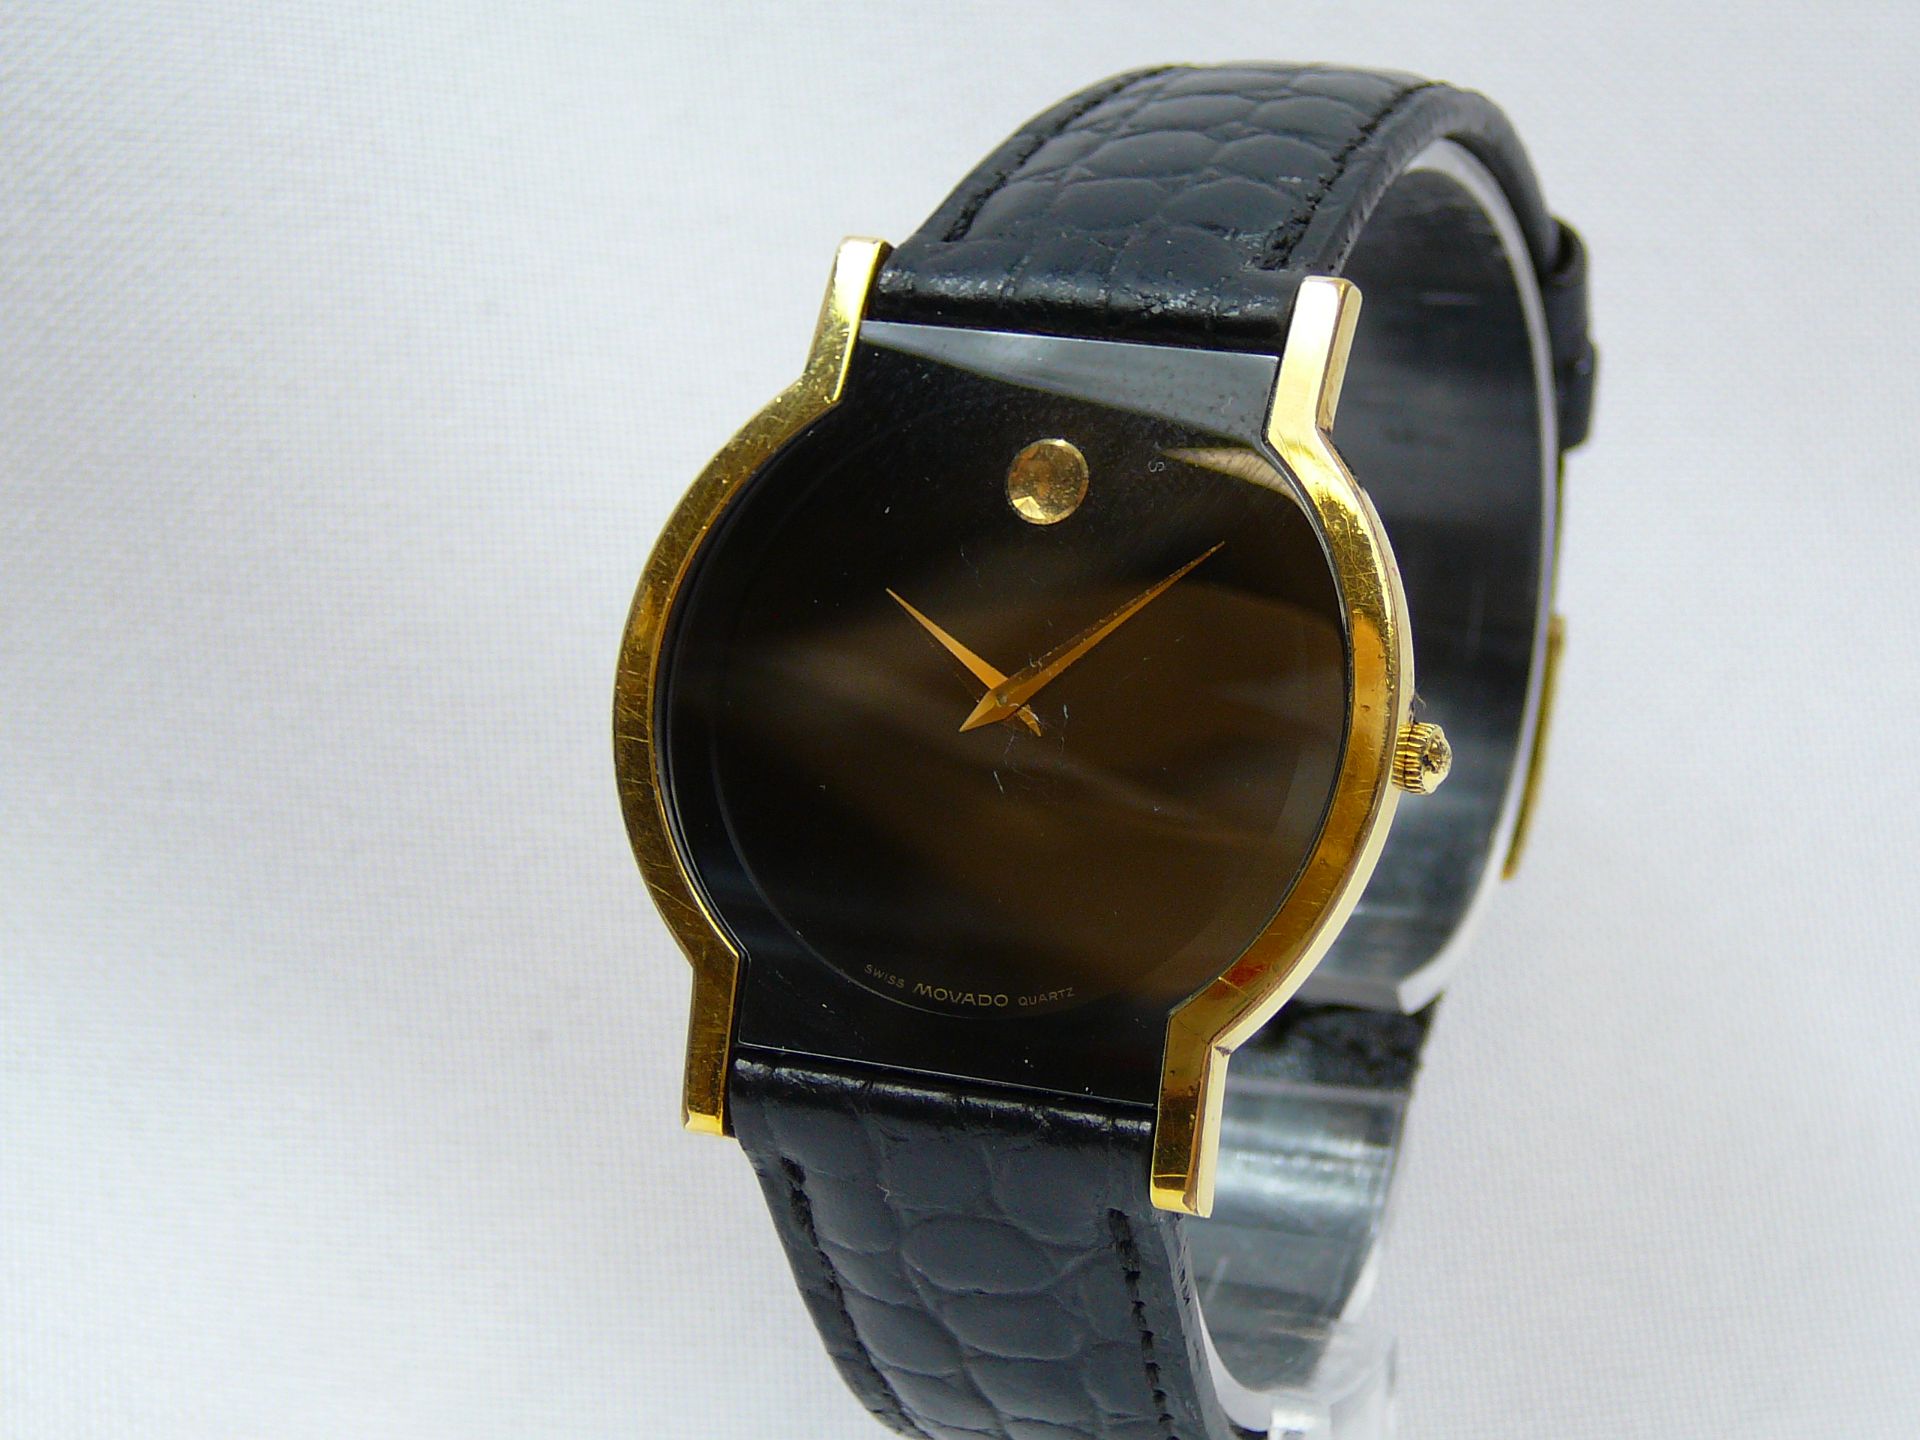 Gents Vintage Movado Wristwatch - Image 2 of 3